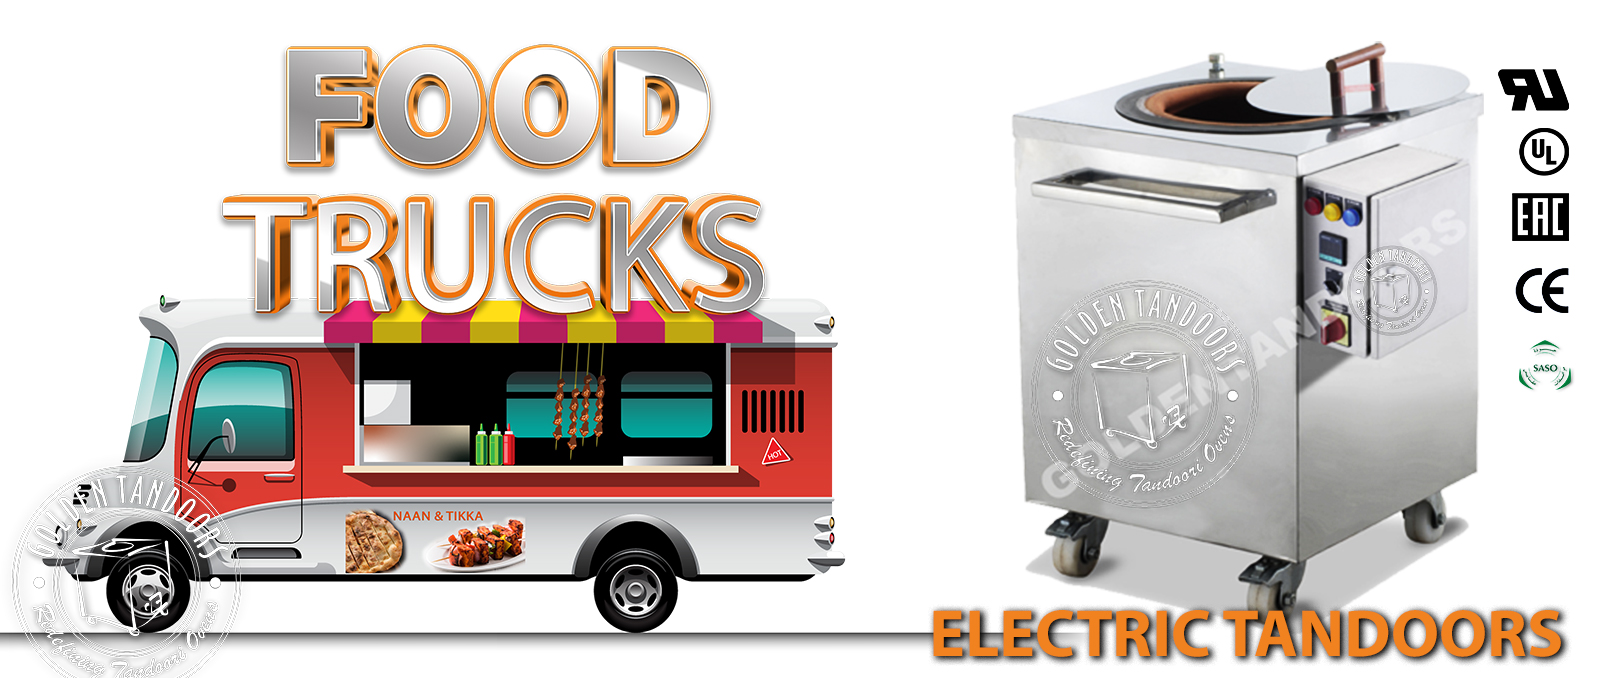 Electric tandoors for food trucks